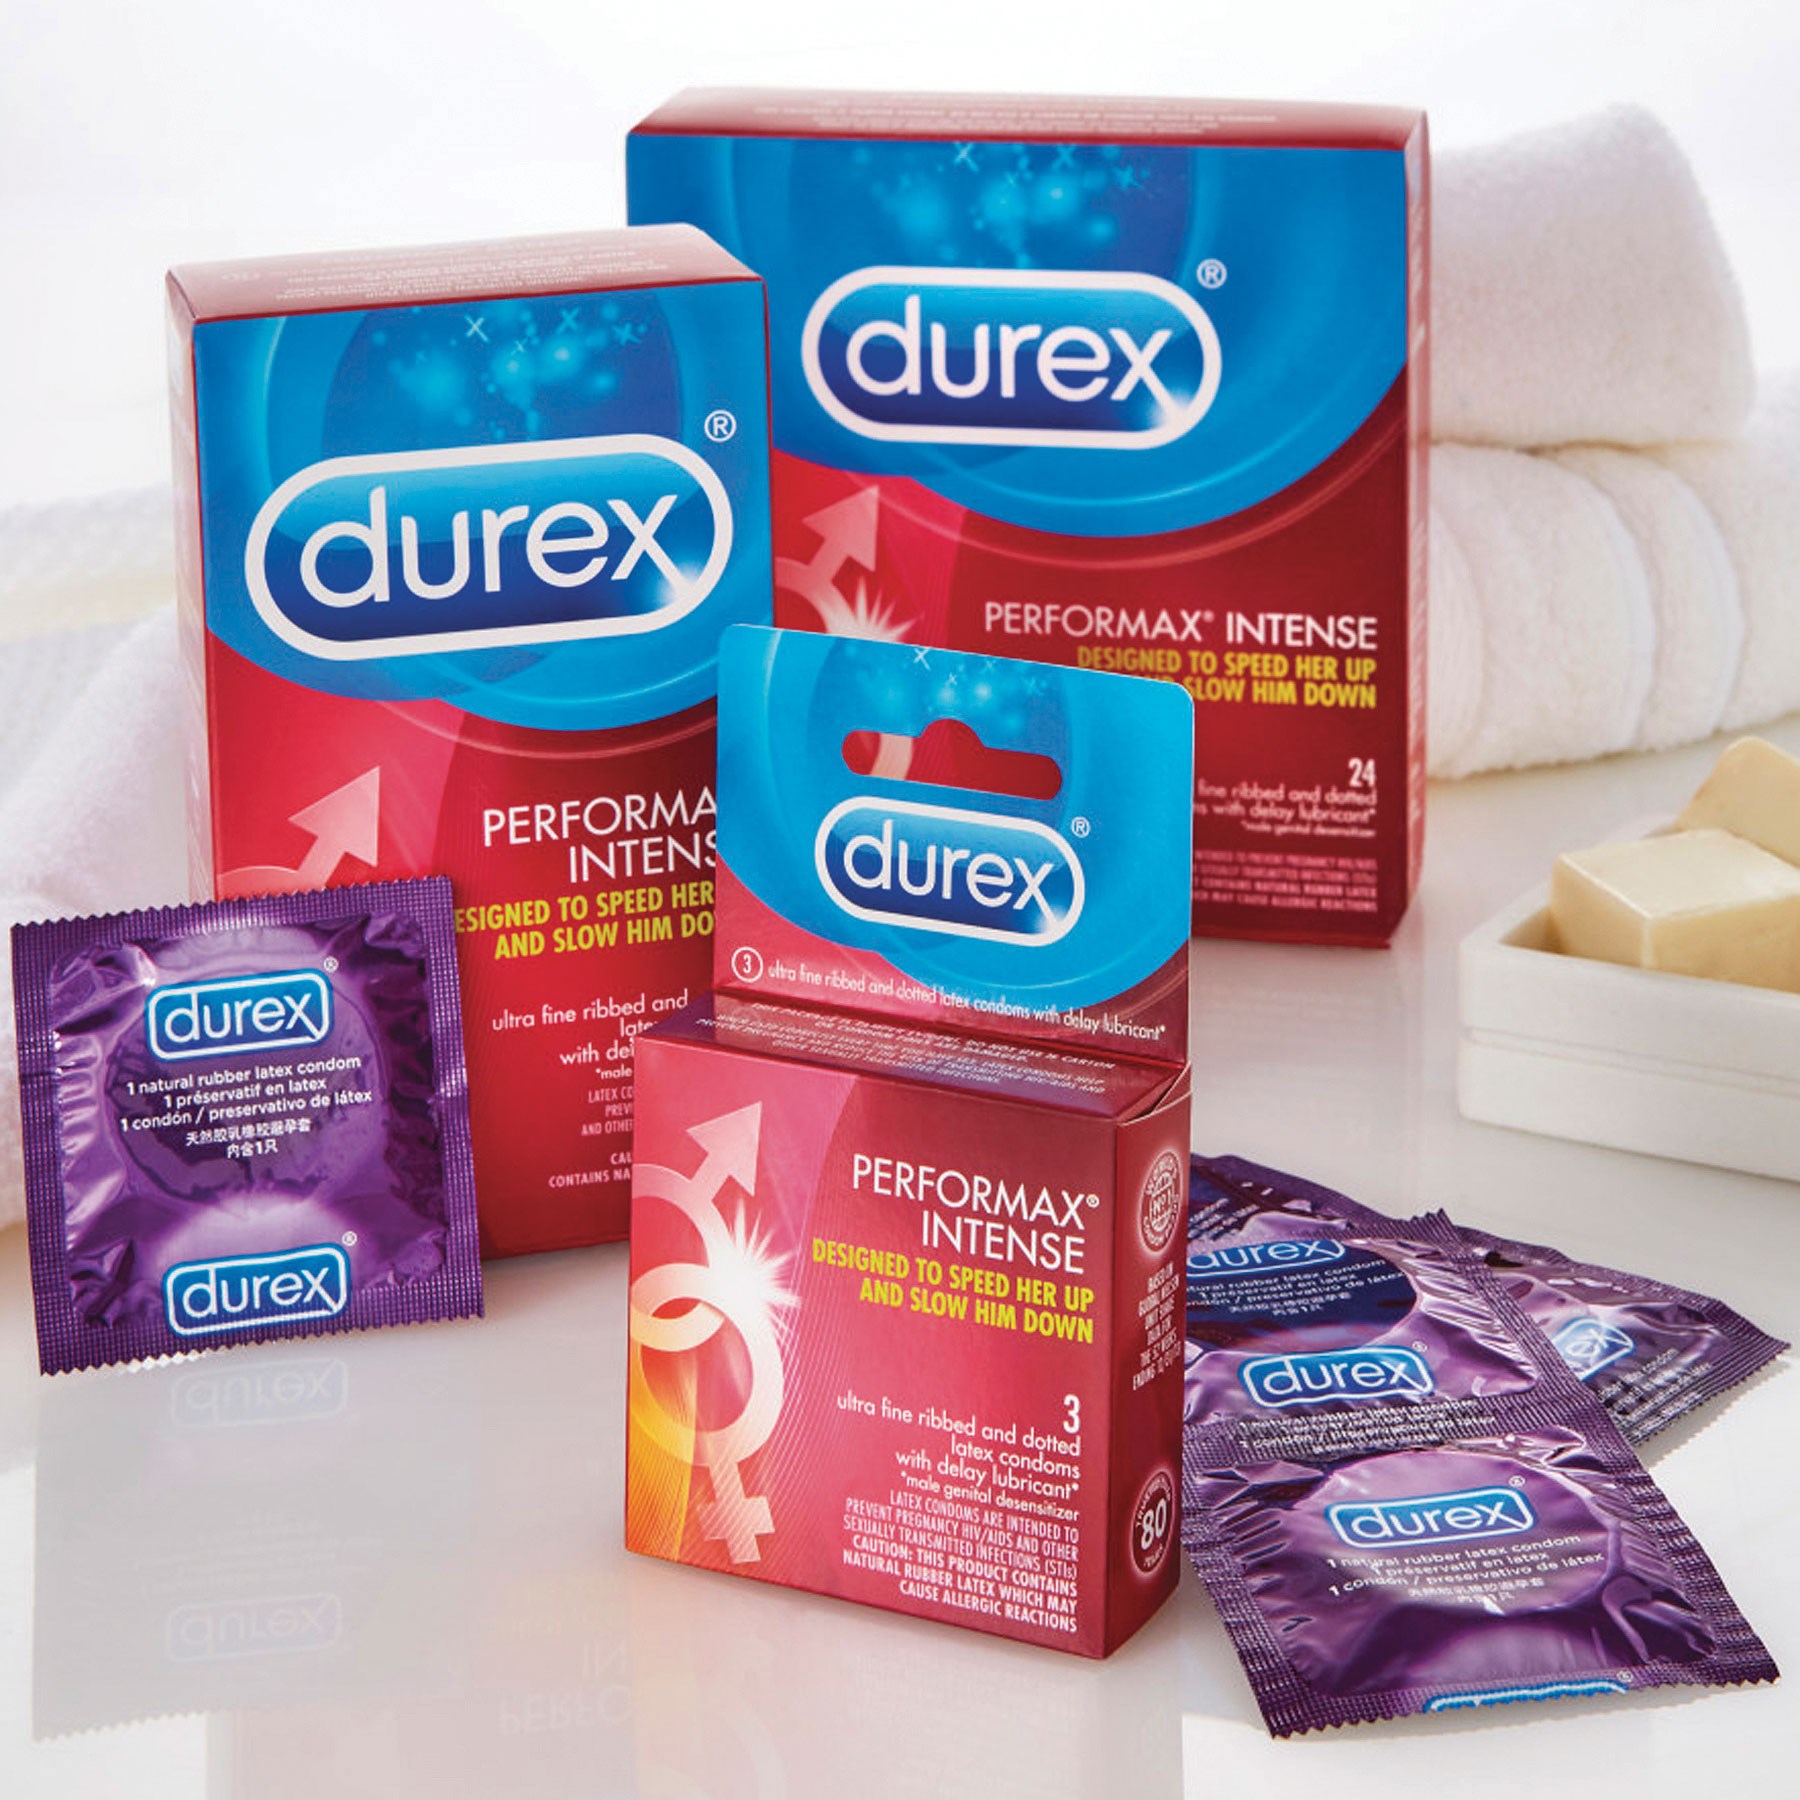 Durex Performax Intense Condom all 3 sizes